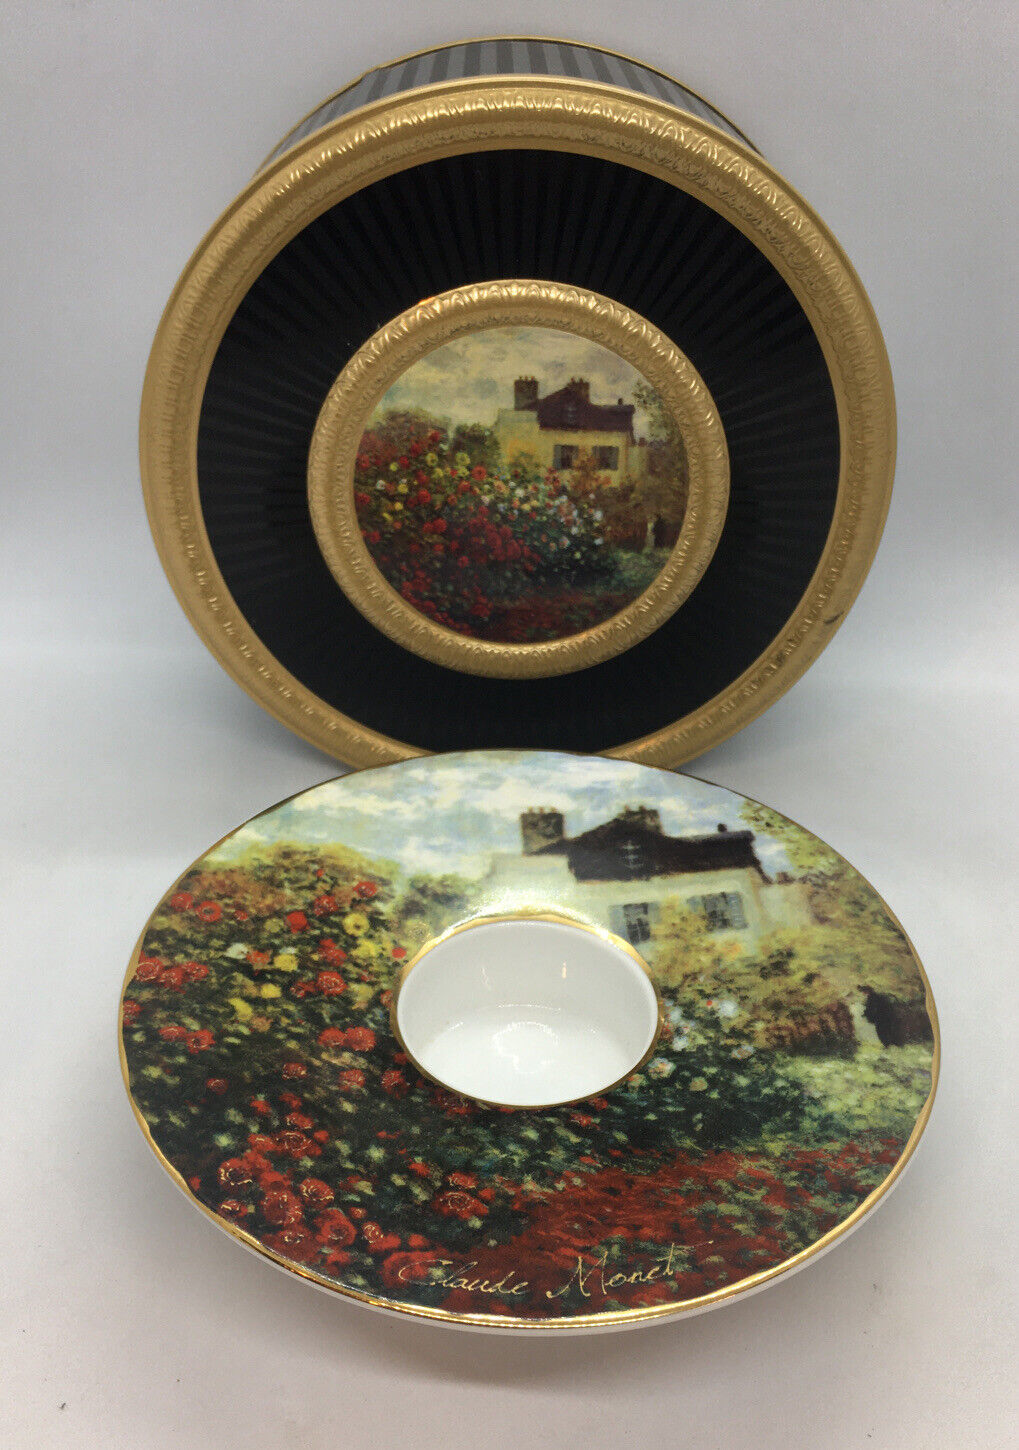 Artis Orbis / Goebel - Claude Monet Inspired Porcelain Votive - In Original Box